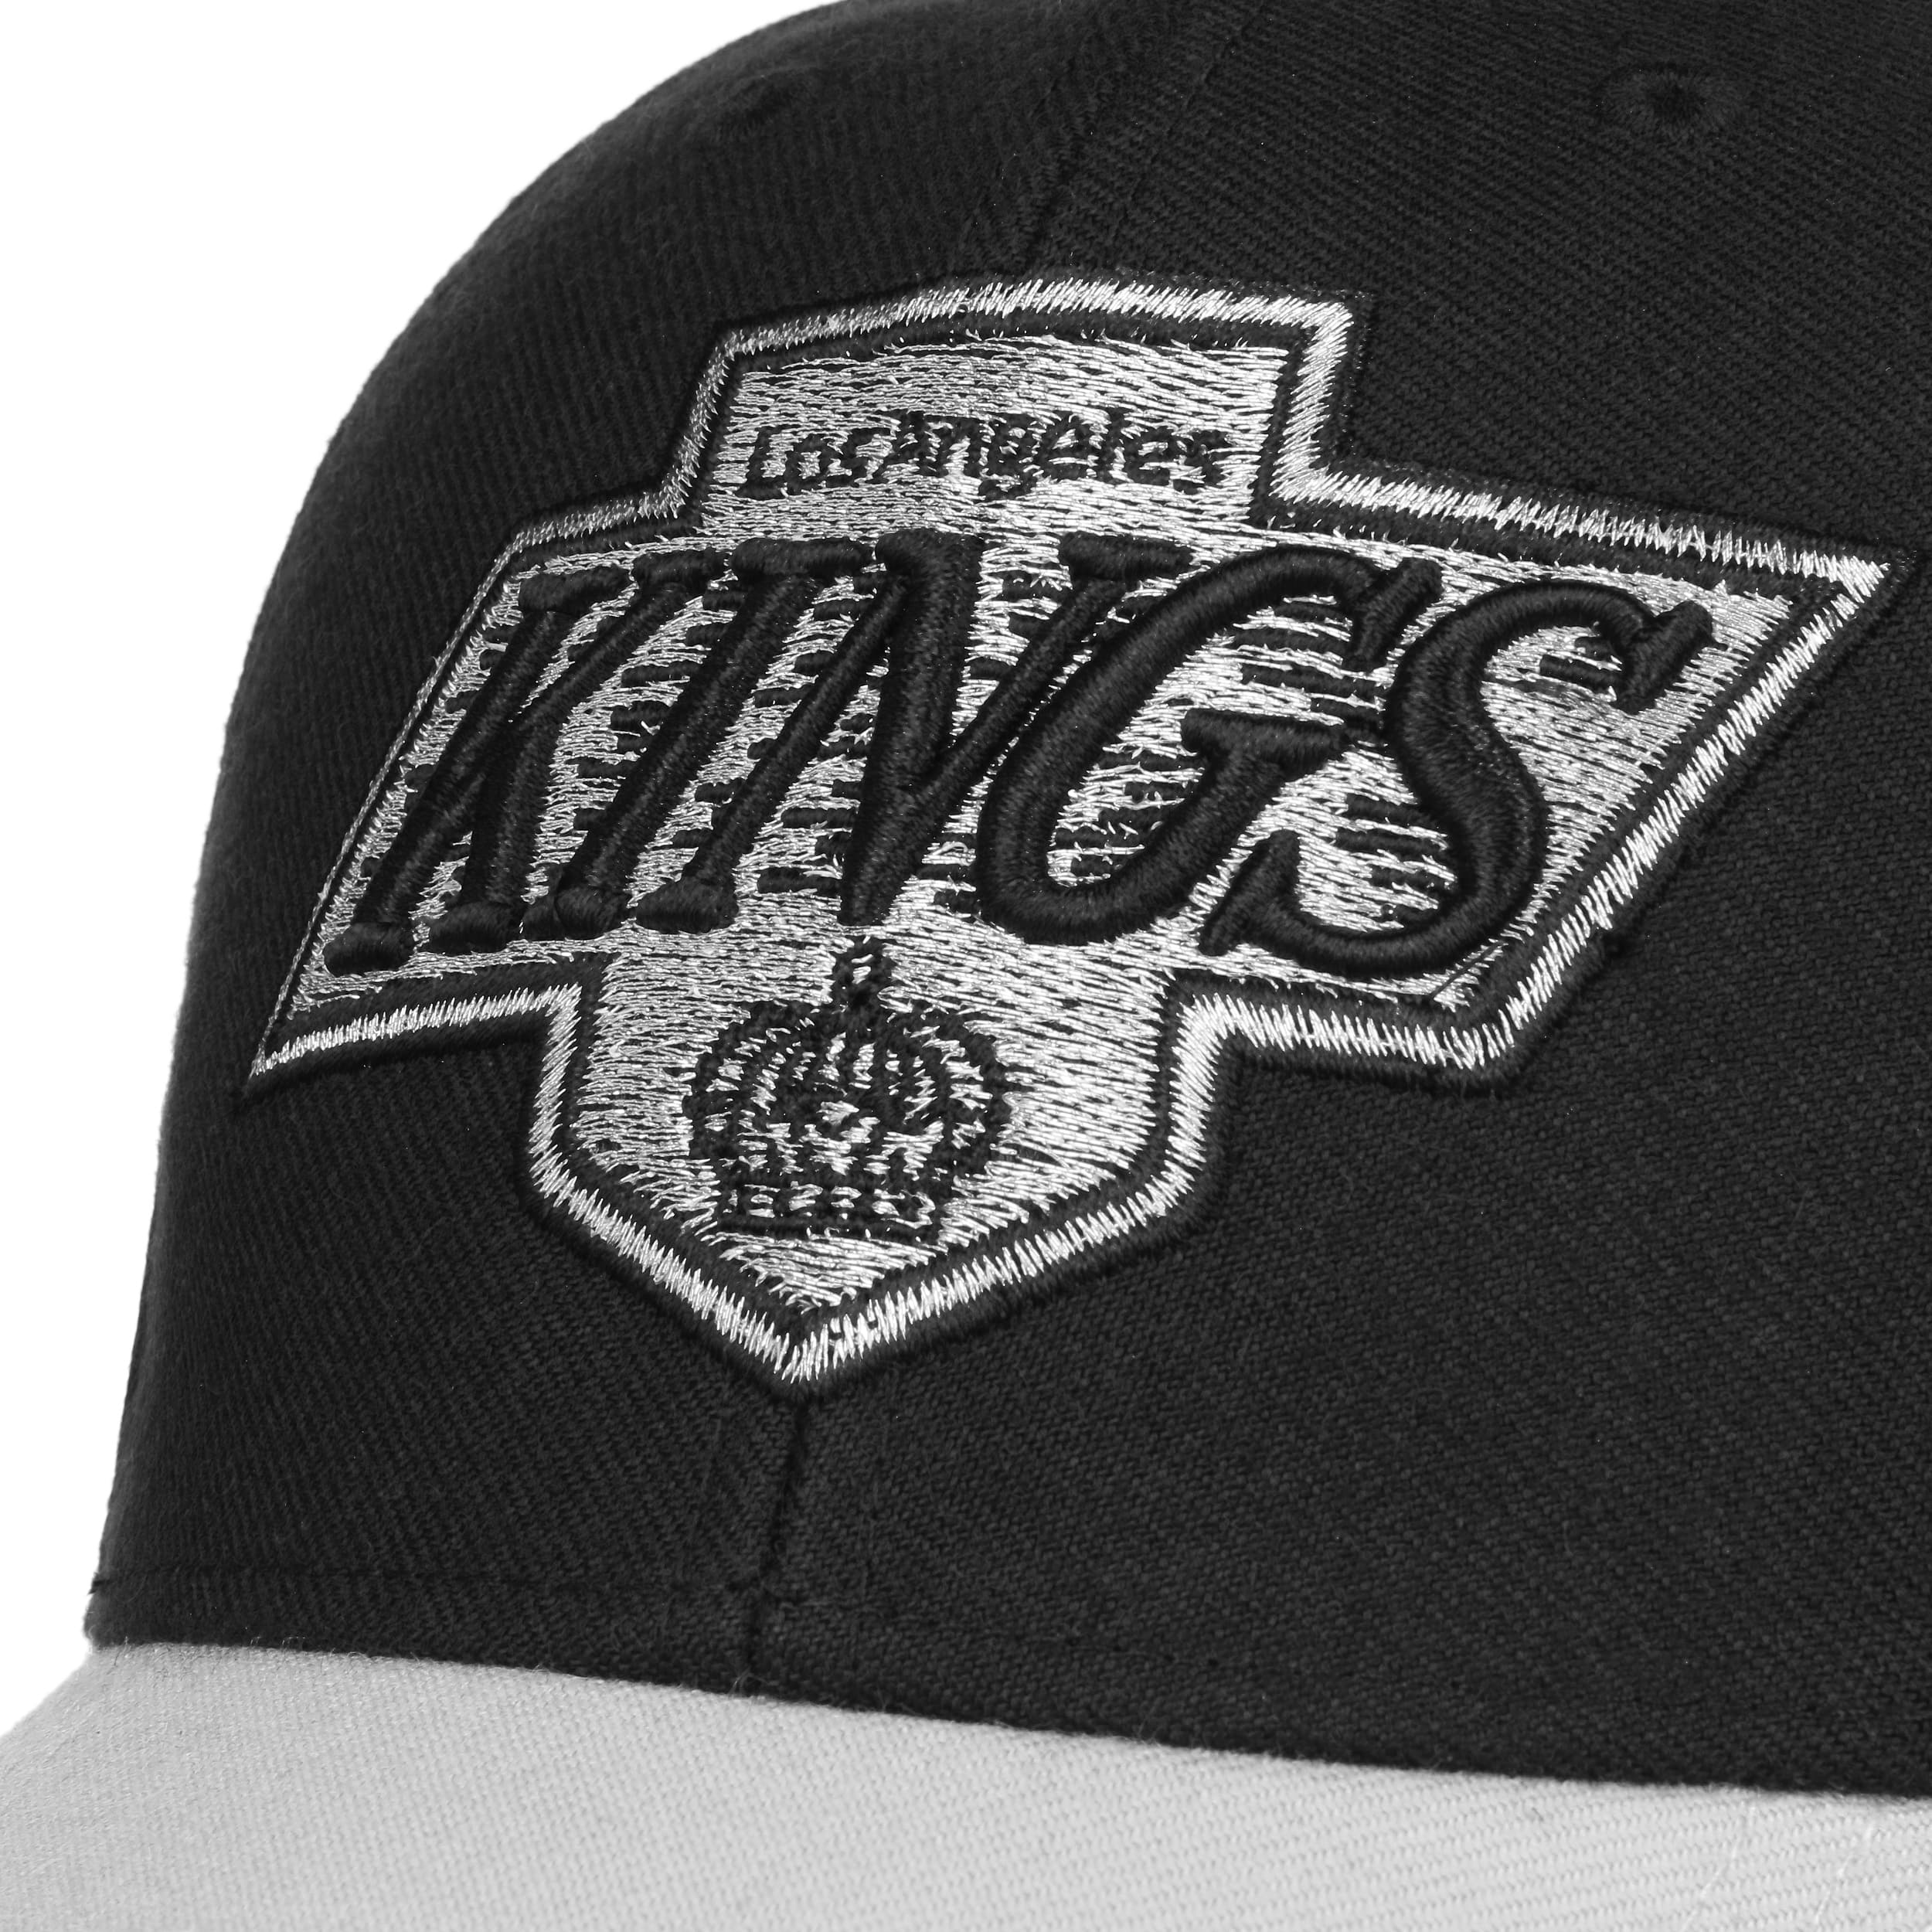 Los Angeles Kings Logo NHL Black & Grey Beanie Hat